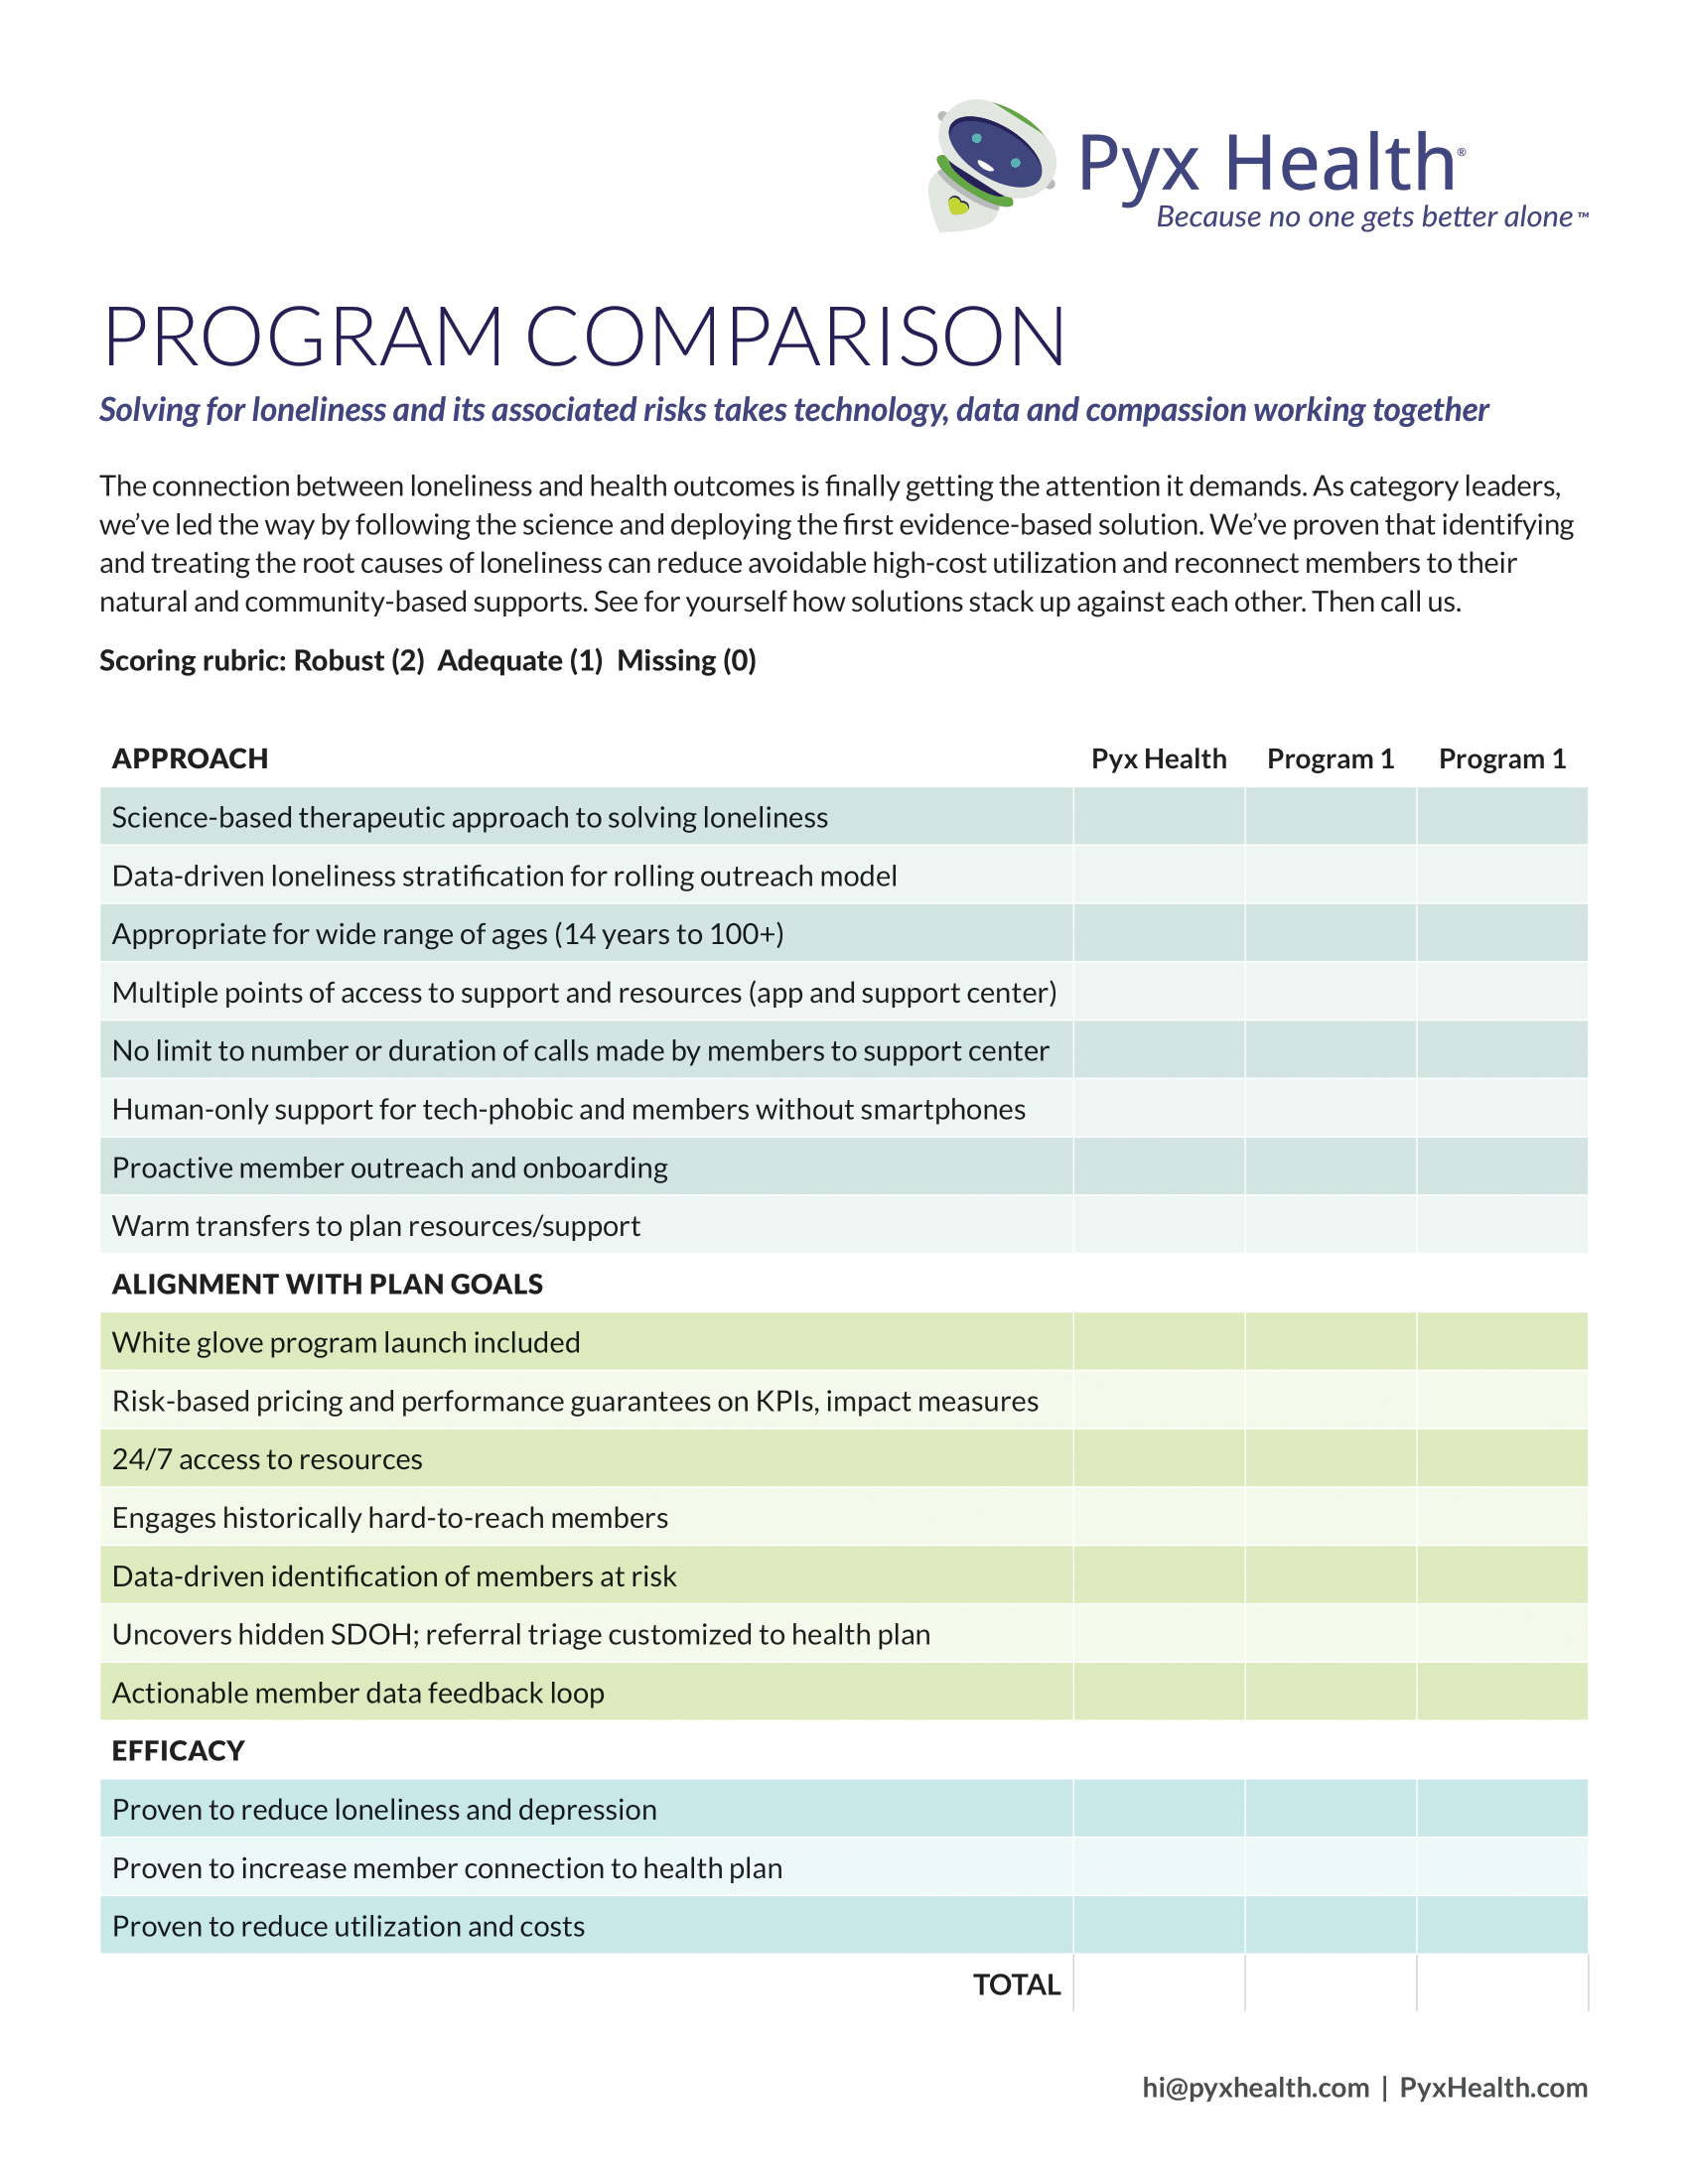 Copy of Pyx Health's Program comparison